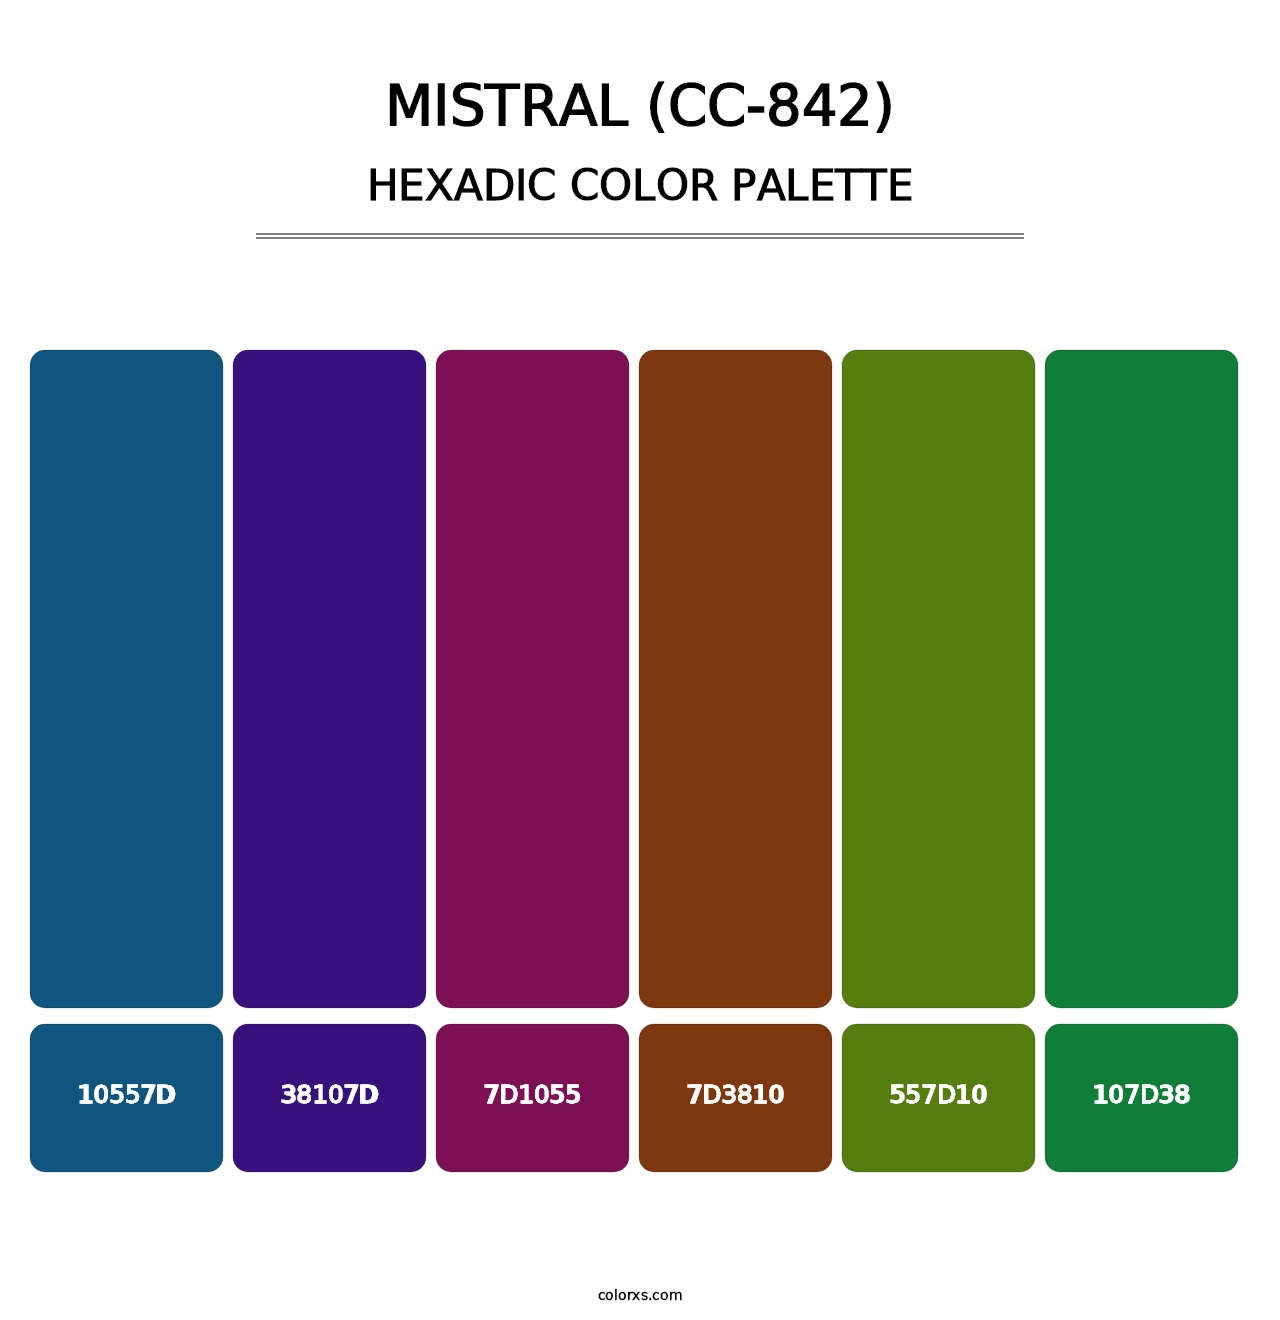 Mistral (CC-842) - Hexadic Color Palette